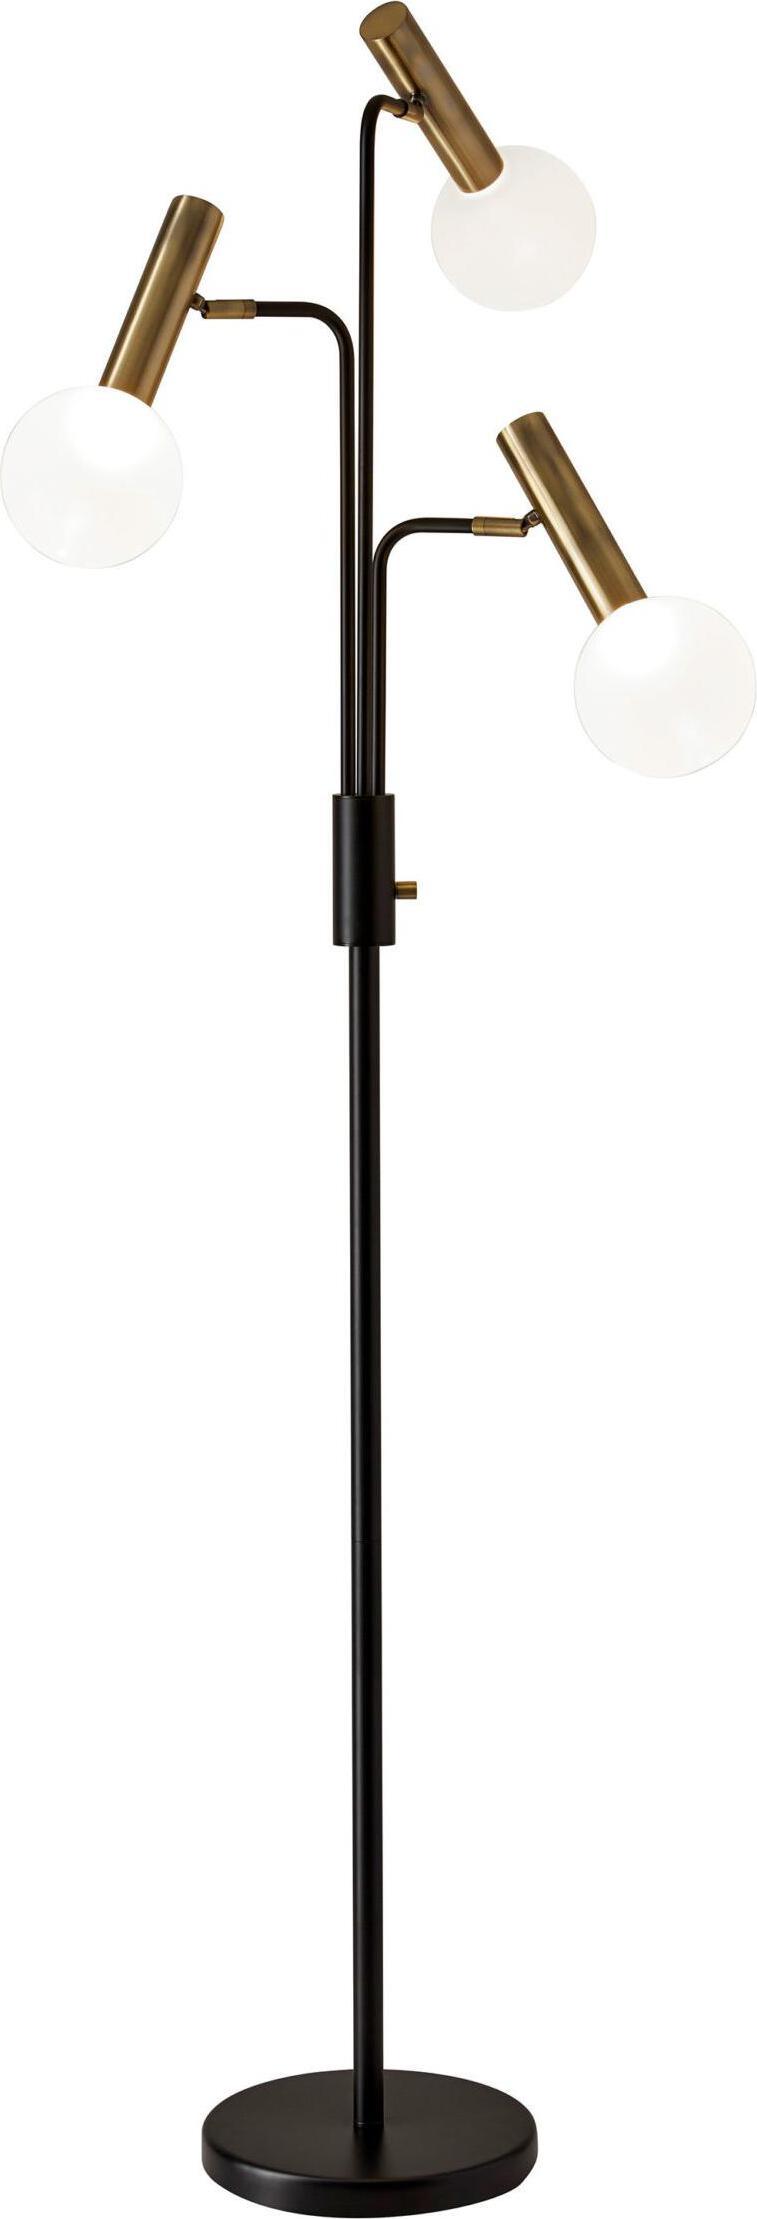 Adesso Floor Lamps - Sinclair LED 3-Arm Floor Lamp Black & Antique Brass